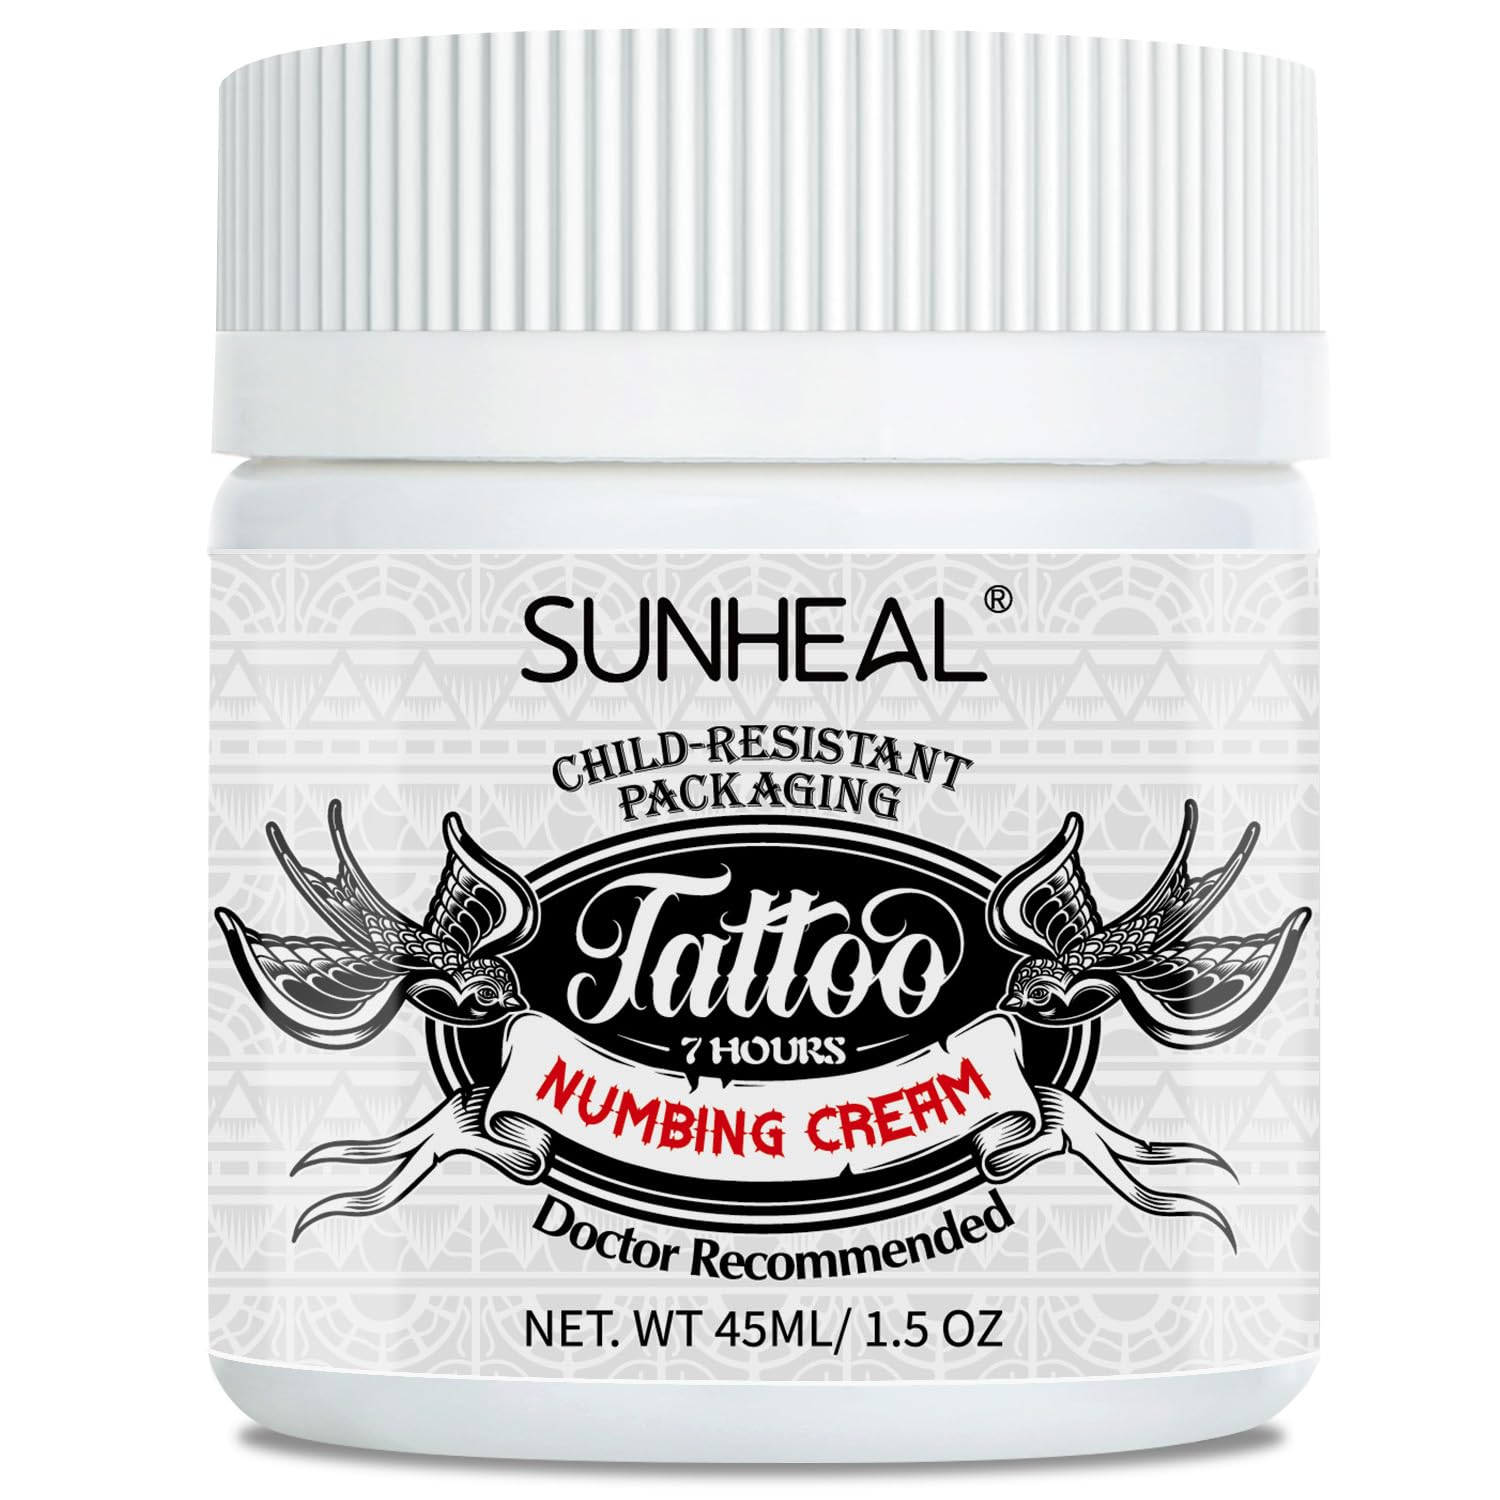 Tattoo Numbing Cream by Sunheal - 1.5 oz